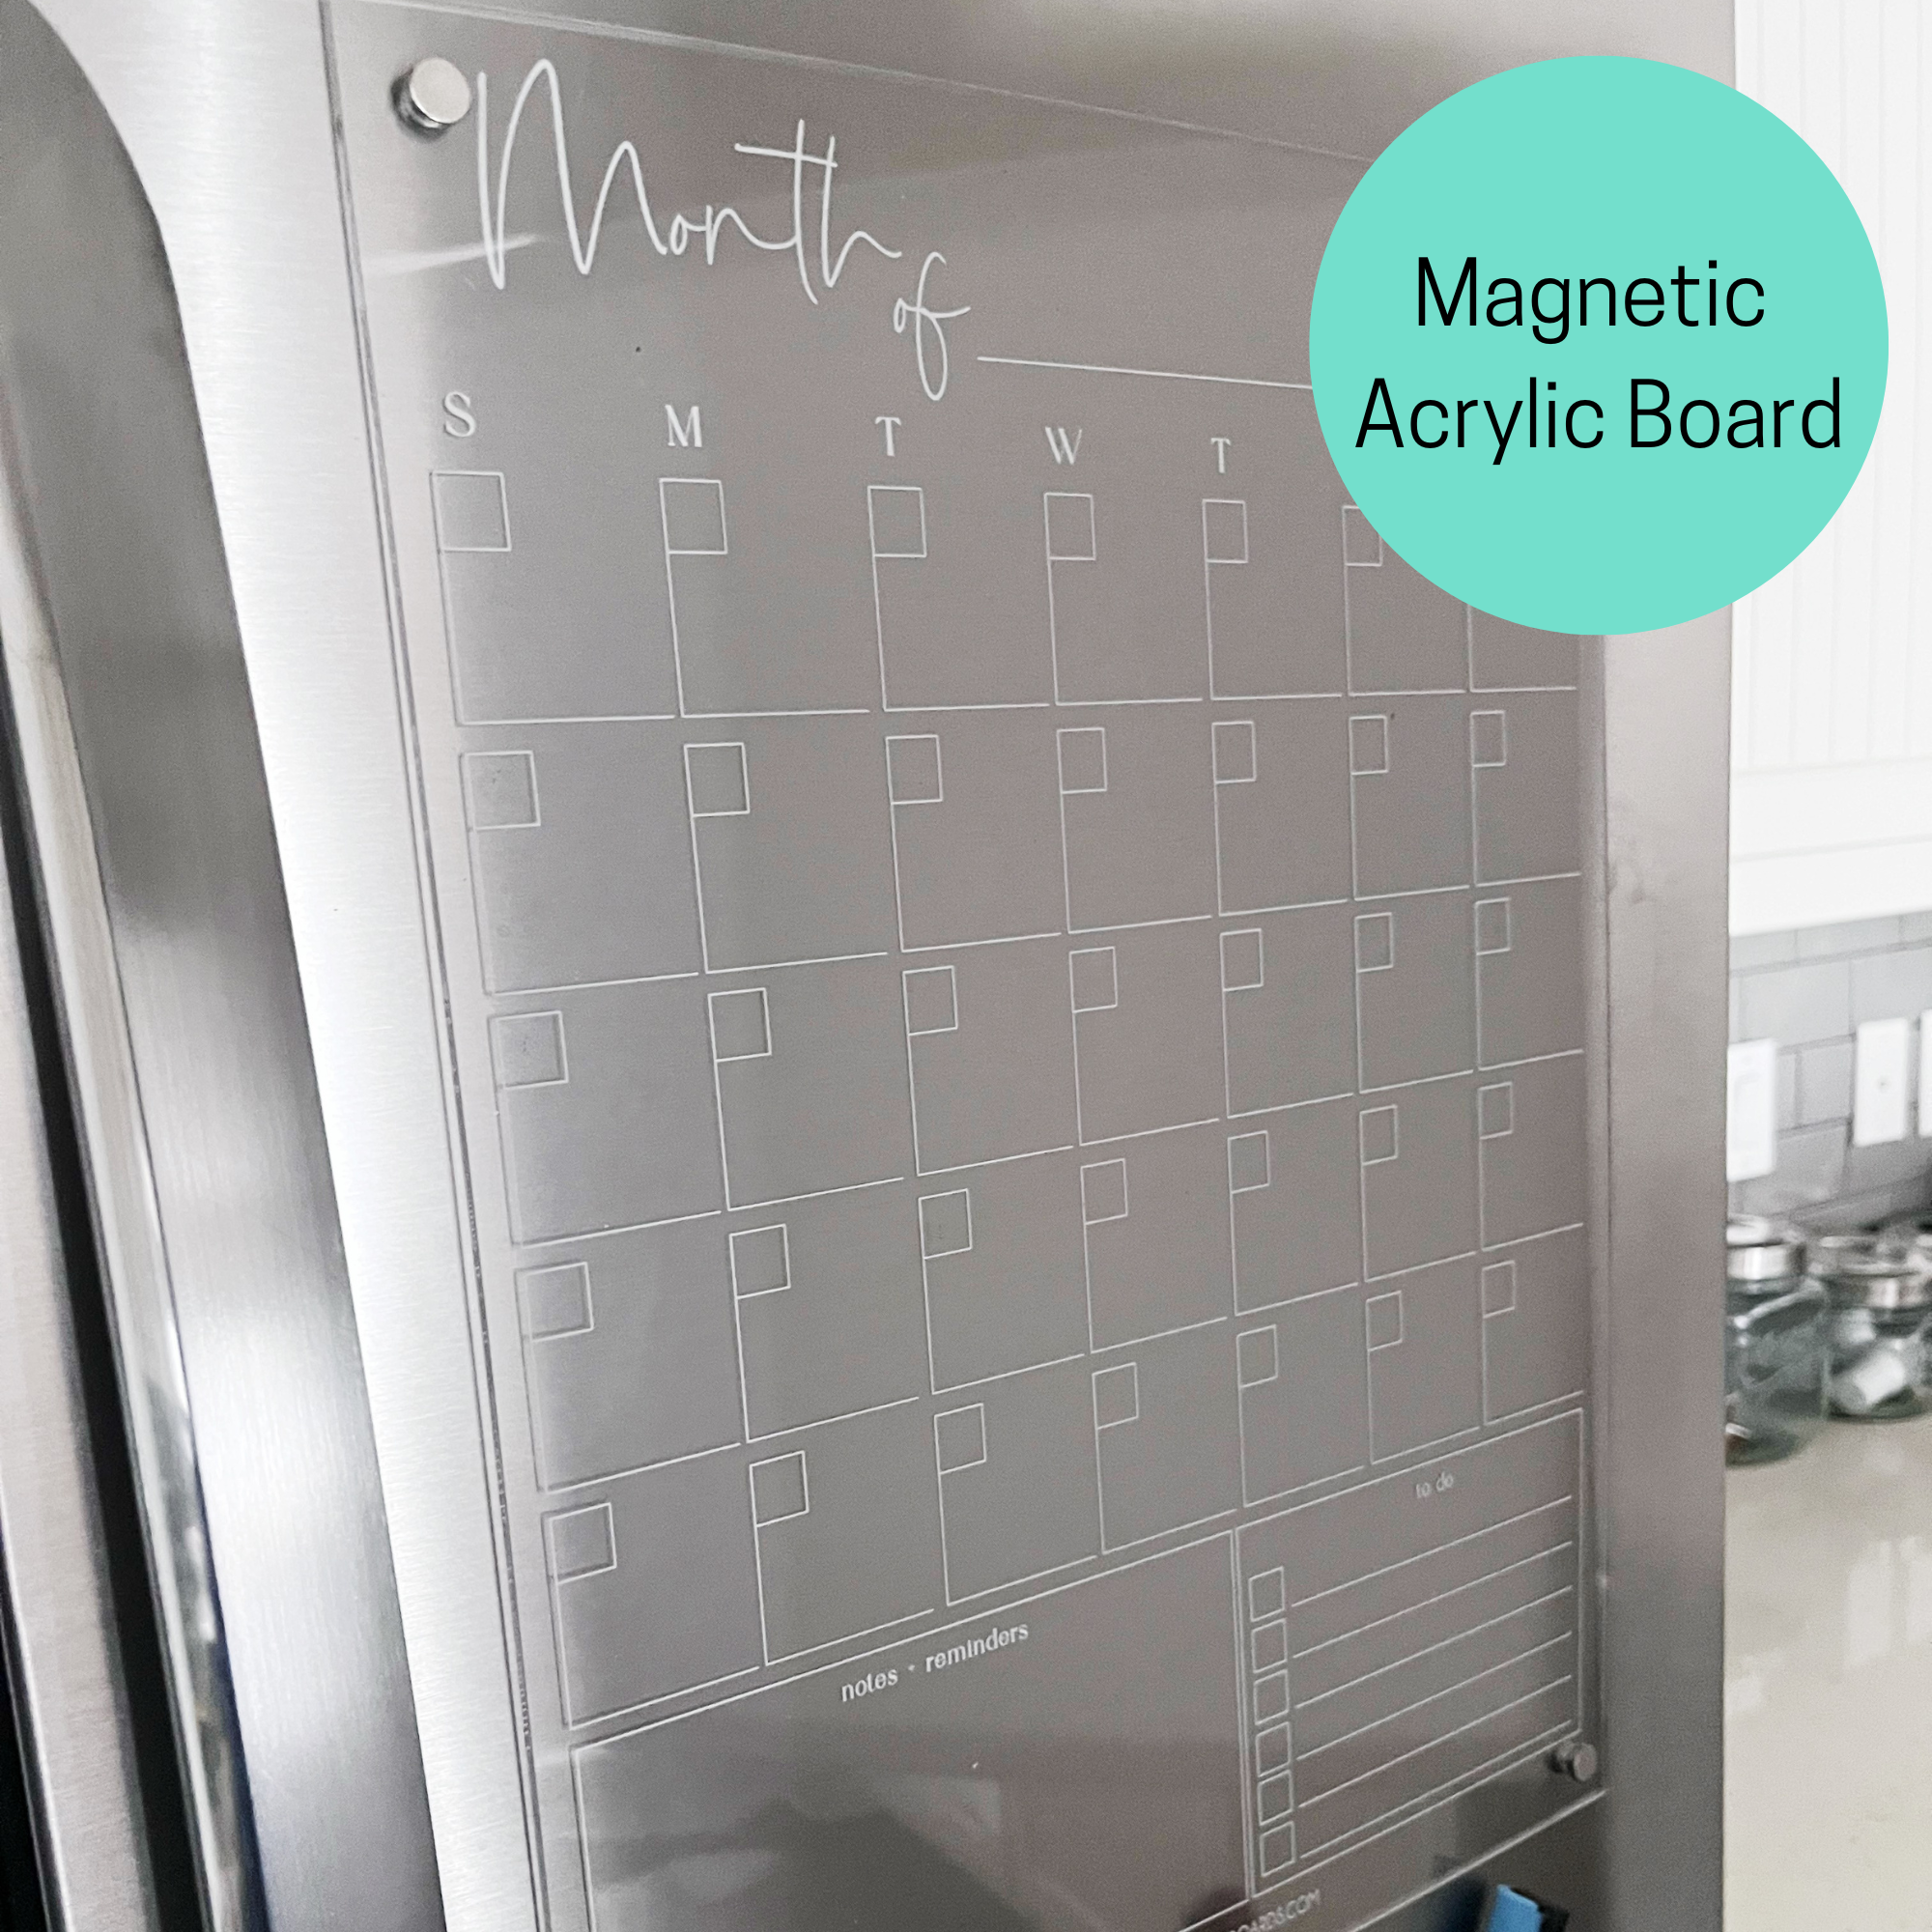 Premium Acrylic Calendar - Classic — Beyond Measure is based in